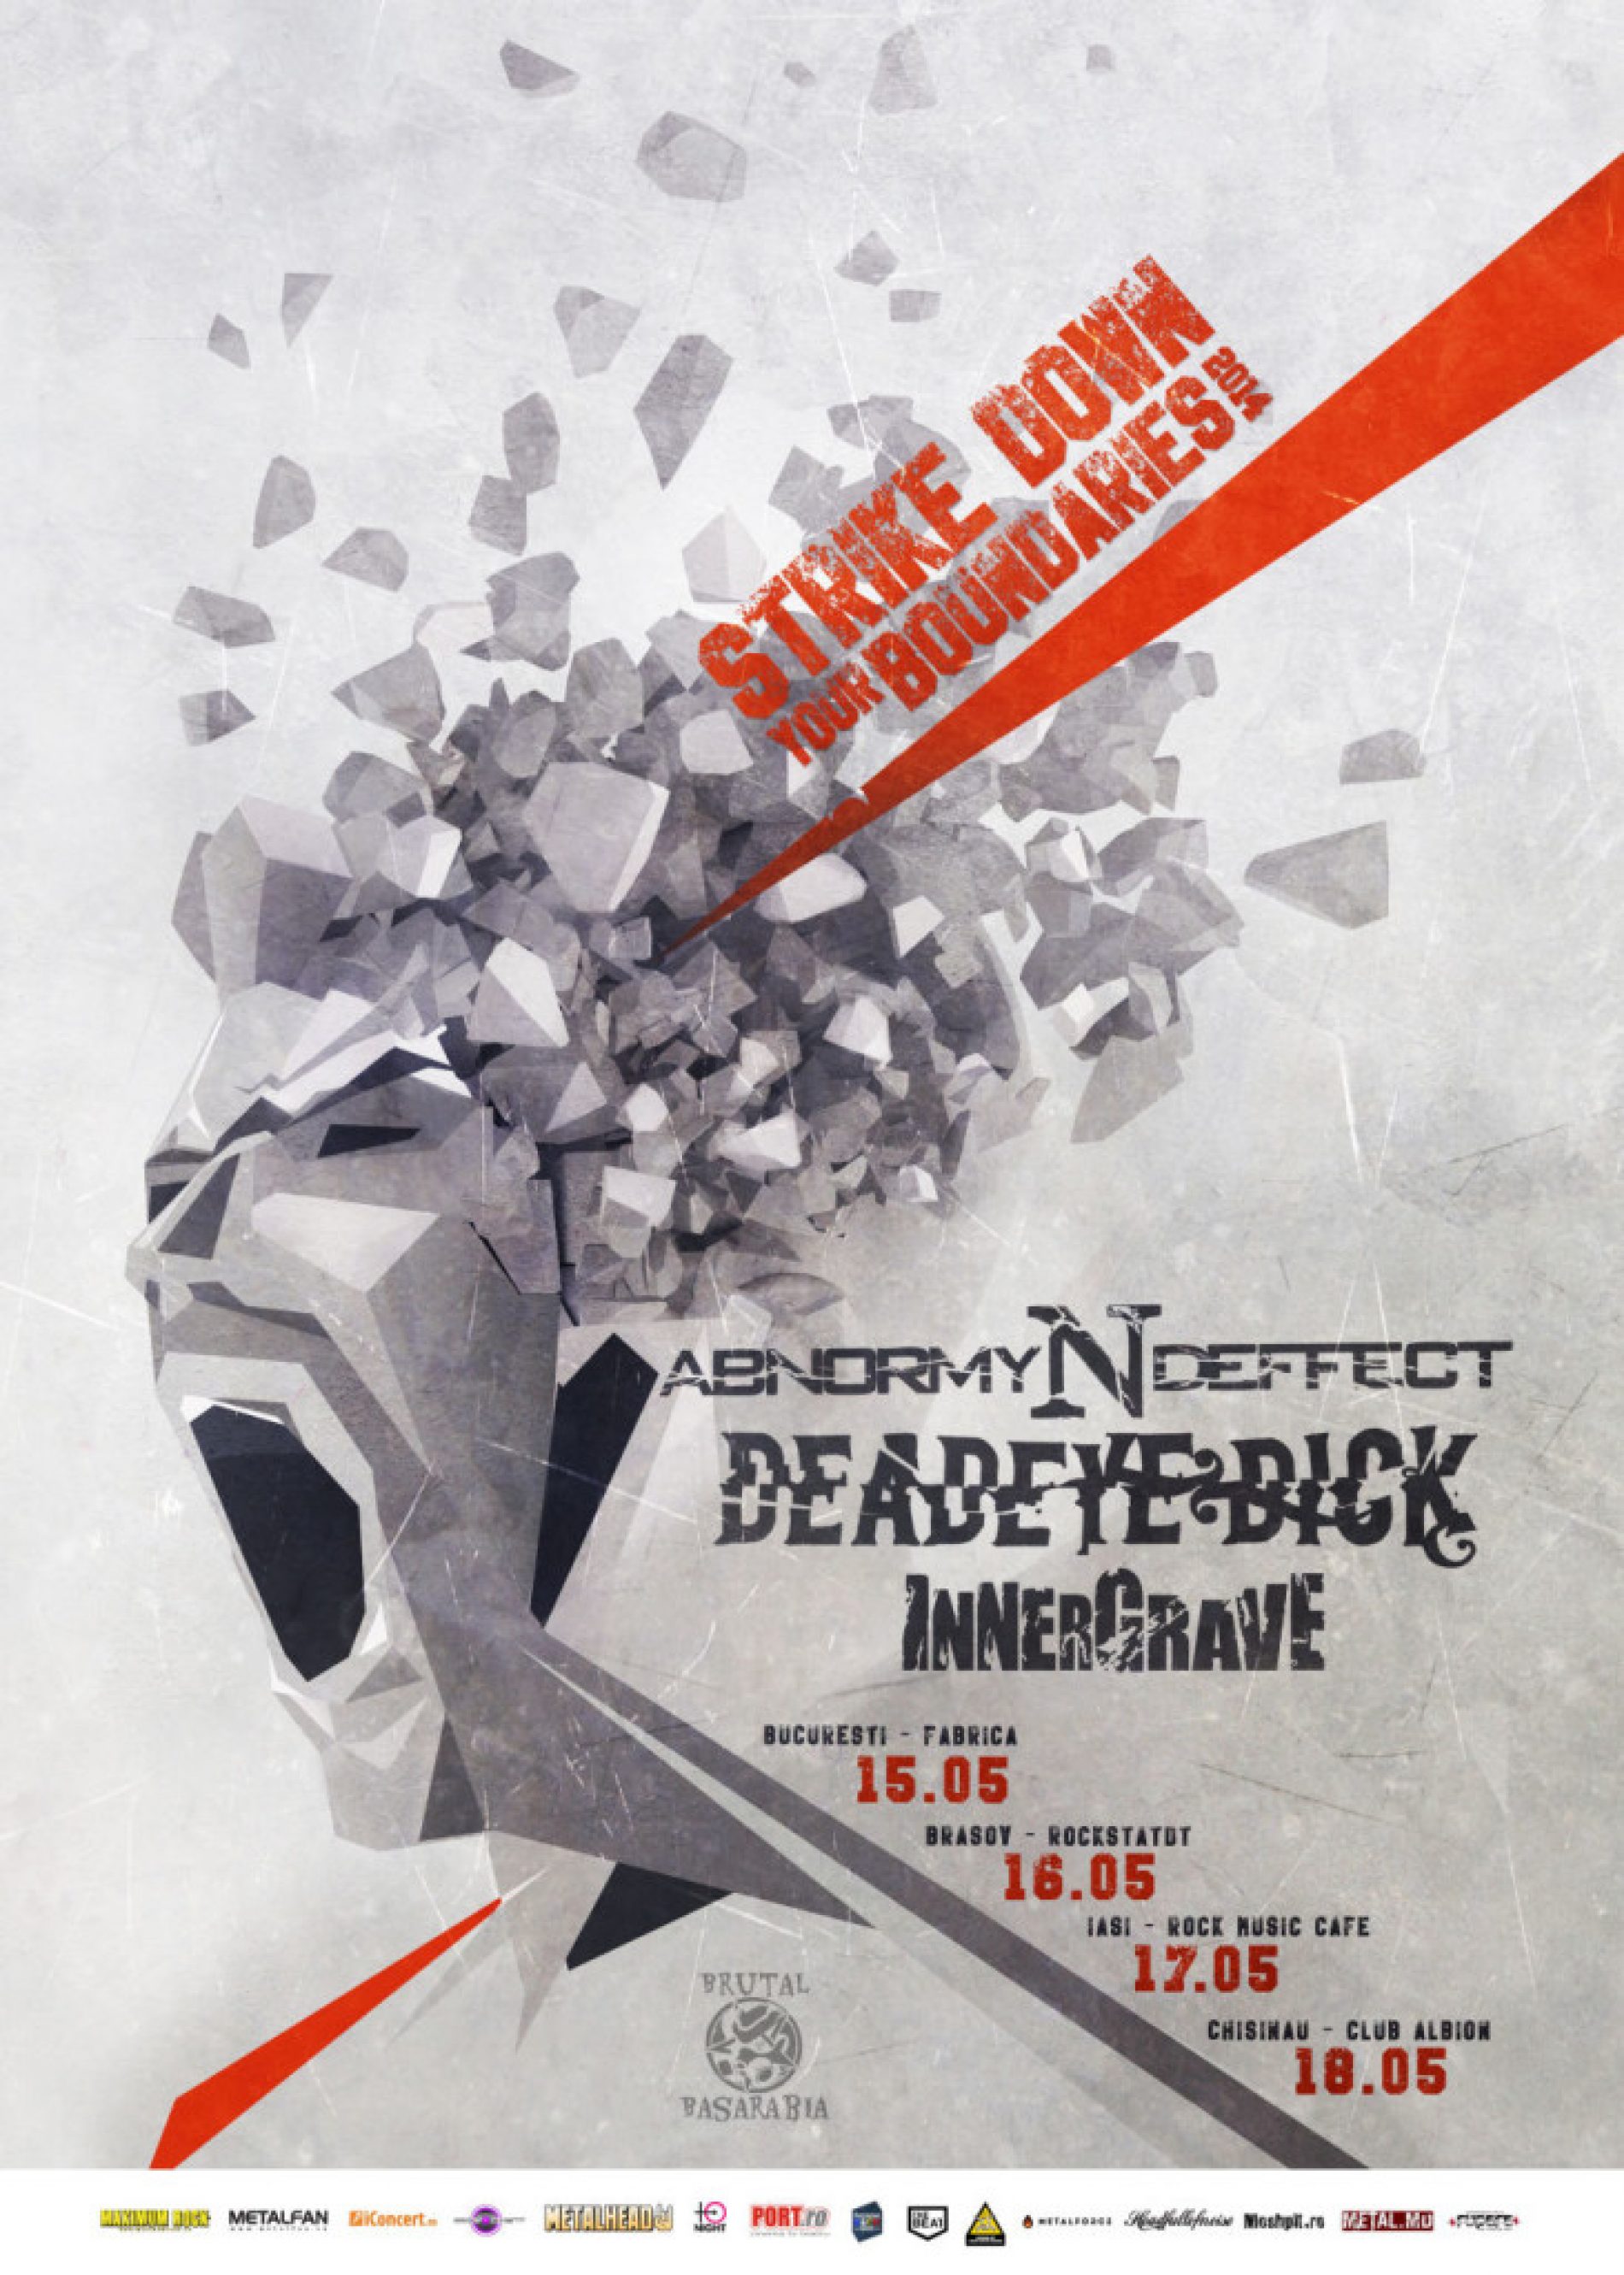 Deadeye Dick si Abnormyndeffect, Strike Down Your Boundaries Tour 2014